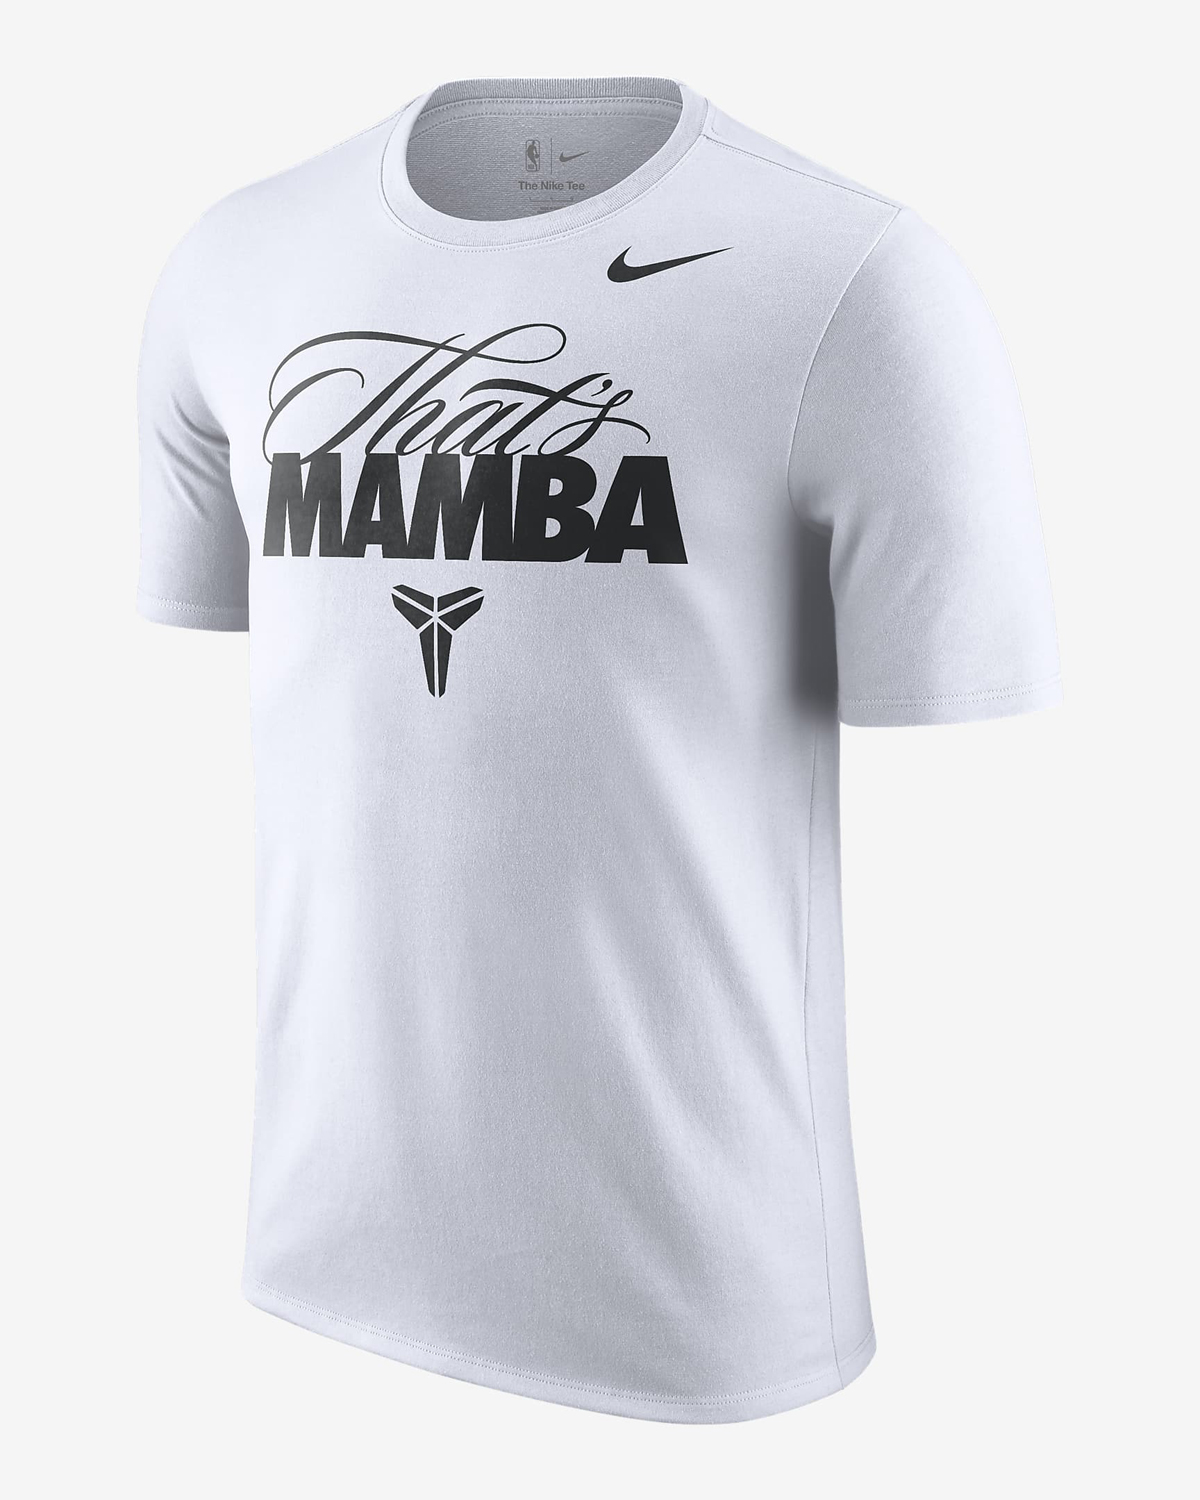 Nike-Kobe-Thats-Mamba-T-Shirt-White